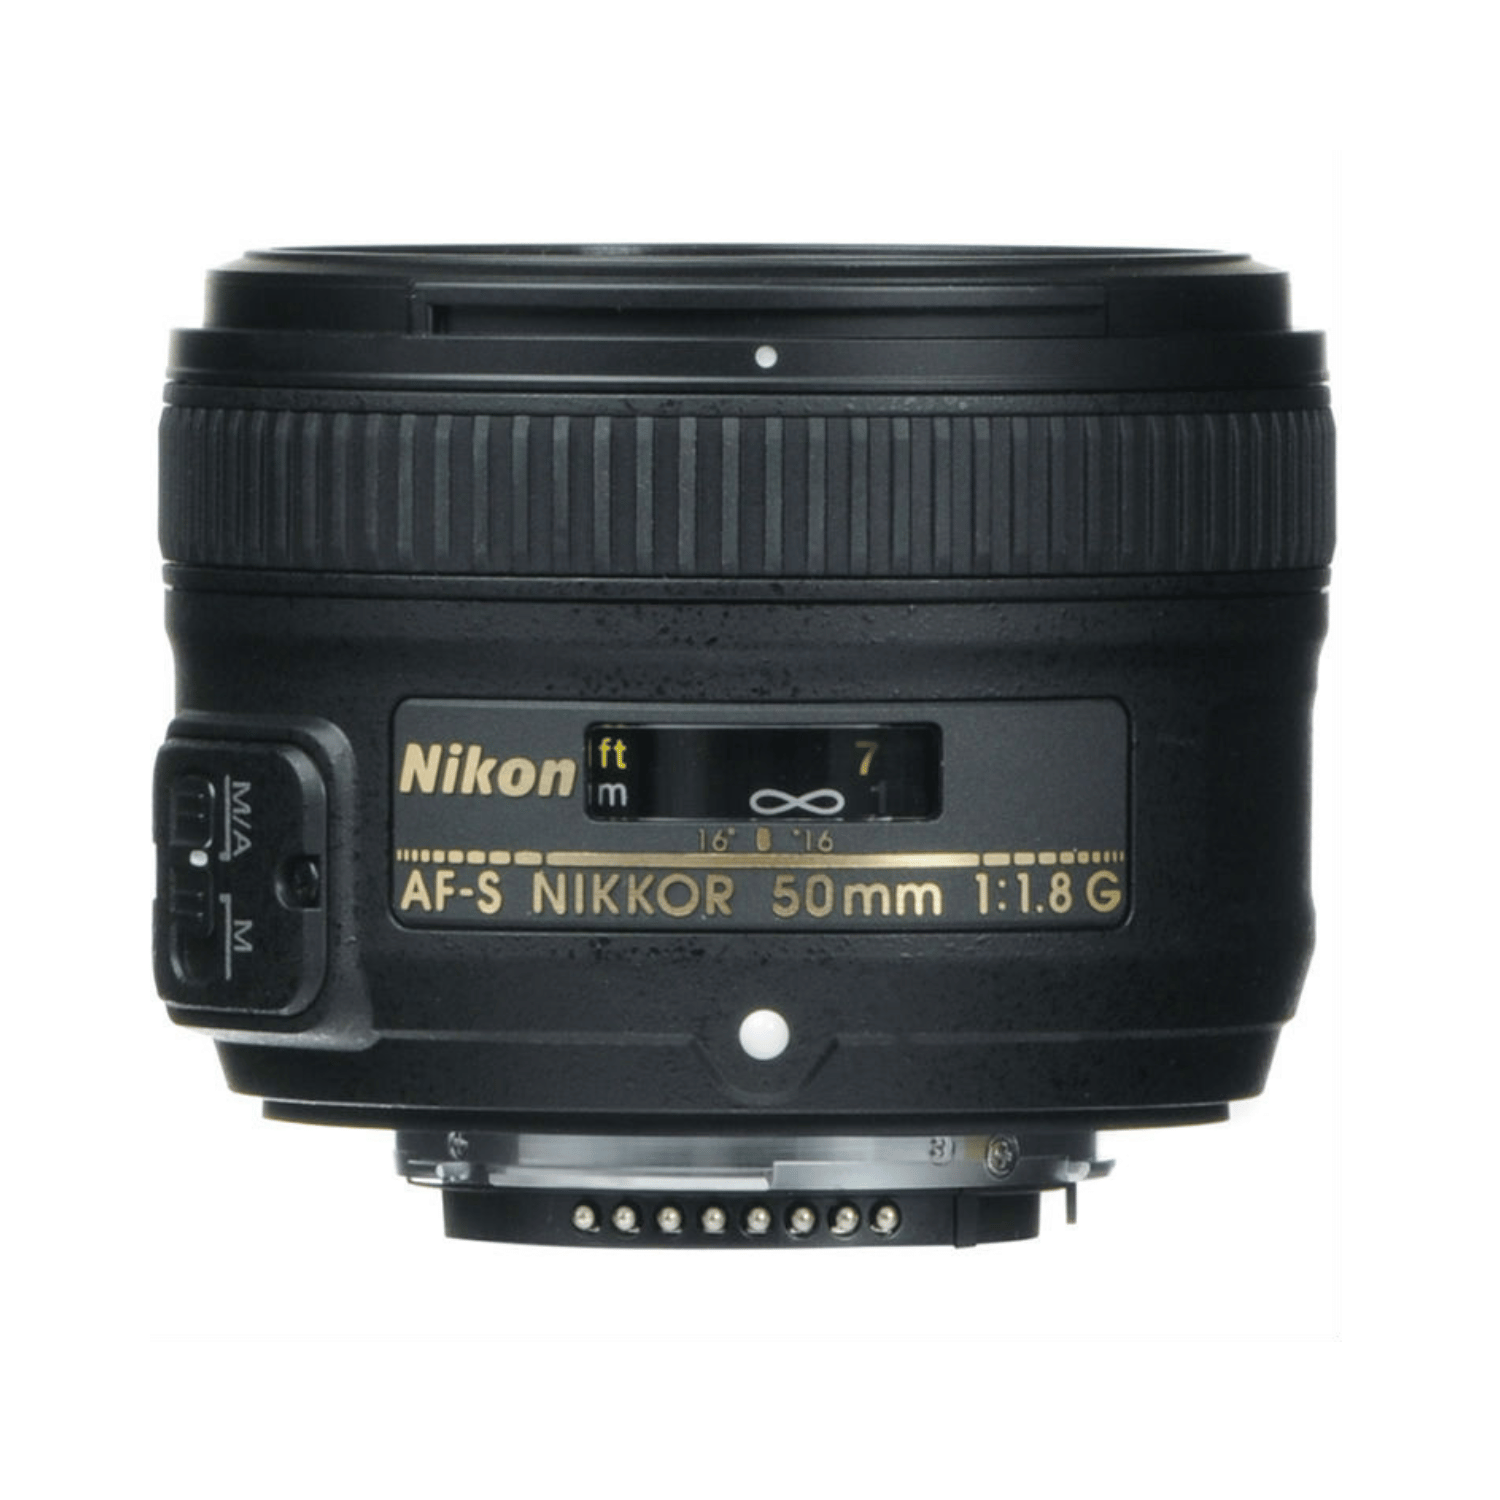 Nikon 50mm F1.8G ED AF-S - Garanzia 4 anni Nital - Cine sud è da 47 anni sul mercato! 311065